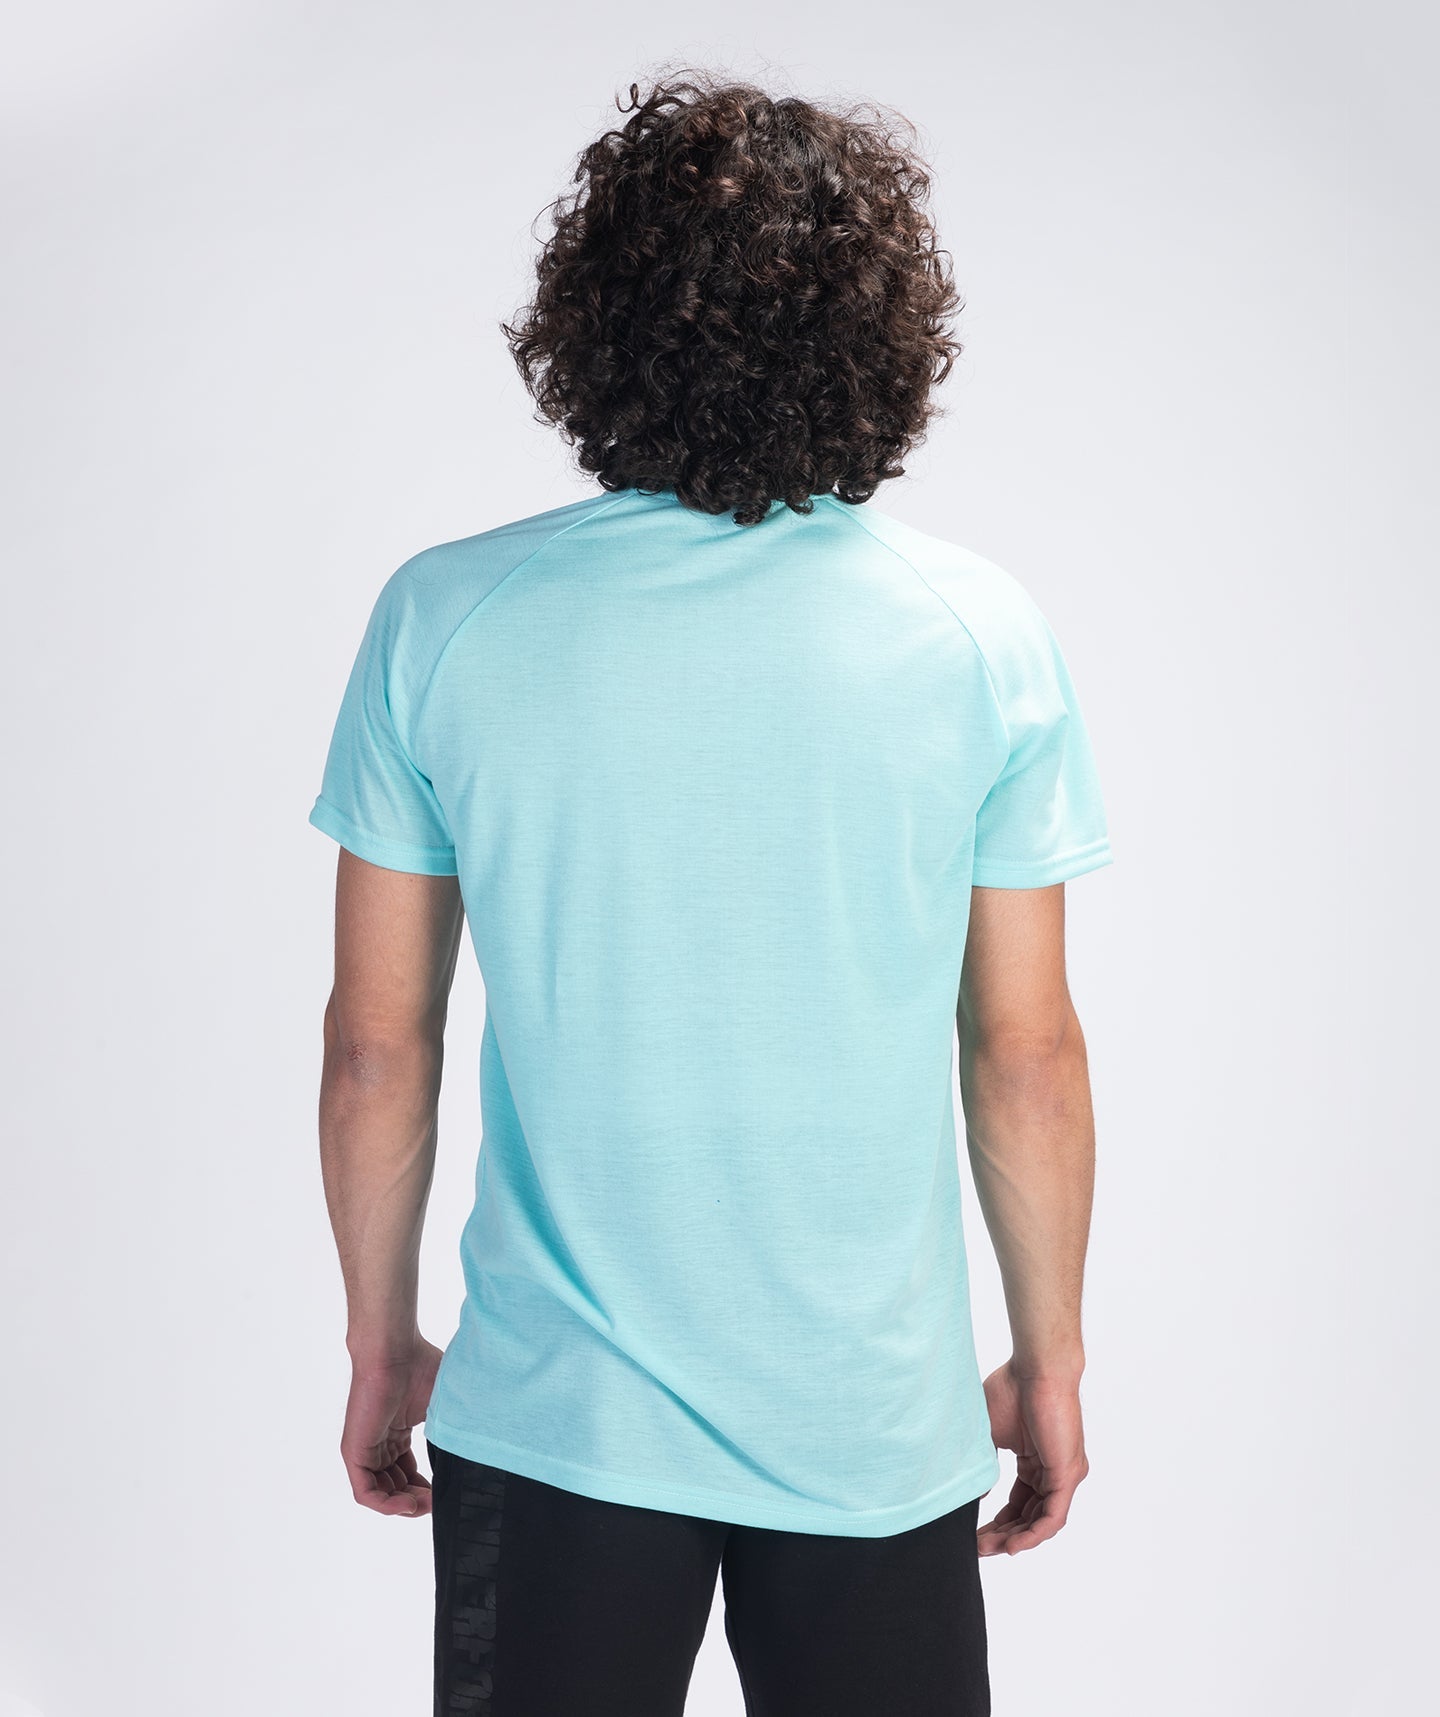 Kg ⚜  
10970-22 ⚜  
B5 ⚜  
PANTONE: Aqua-Blue ⚜  
single jersey, 100 % spun polyester, 165 gsm, 150 cm, P:Aqua-Blue